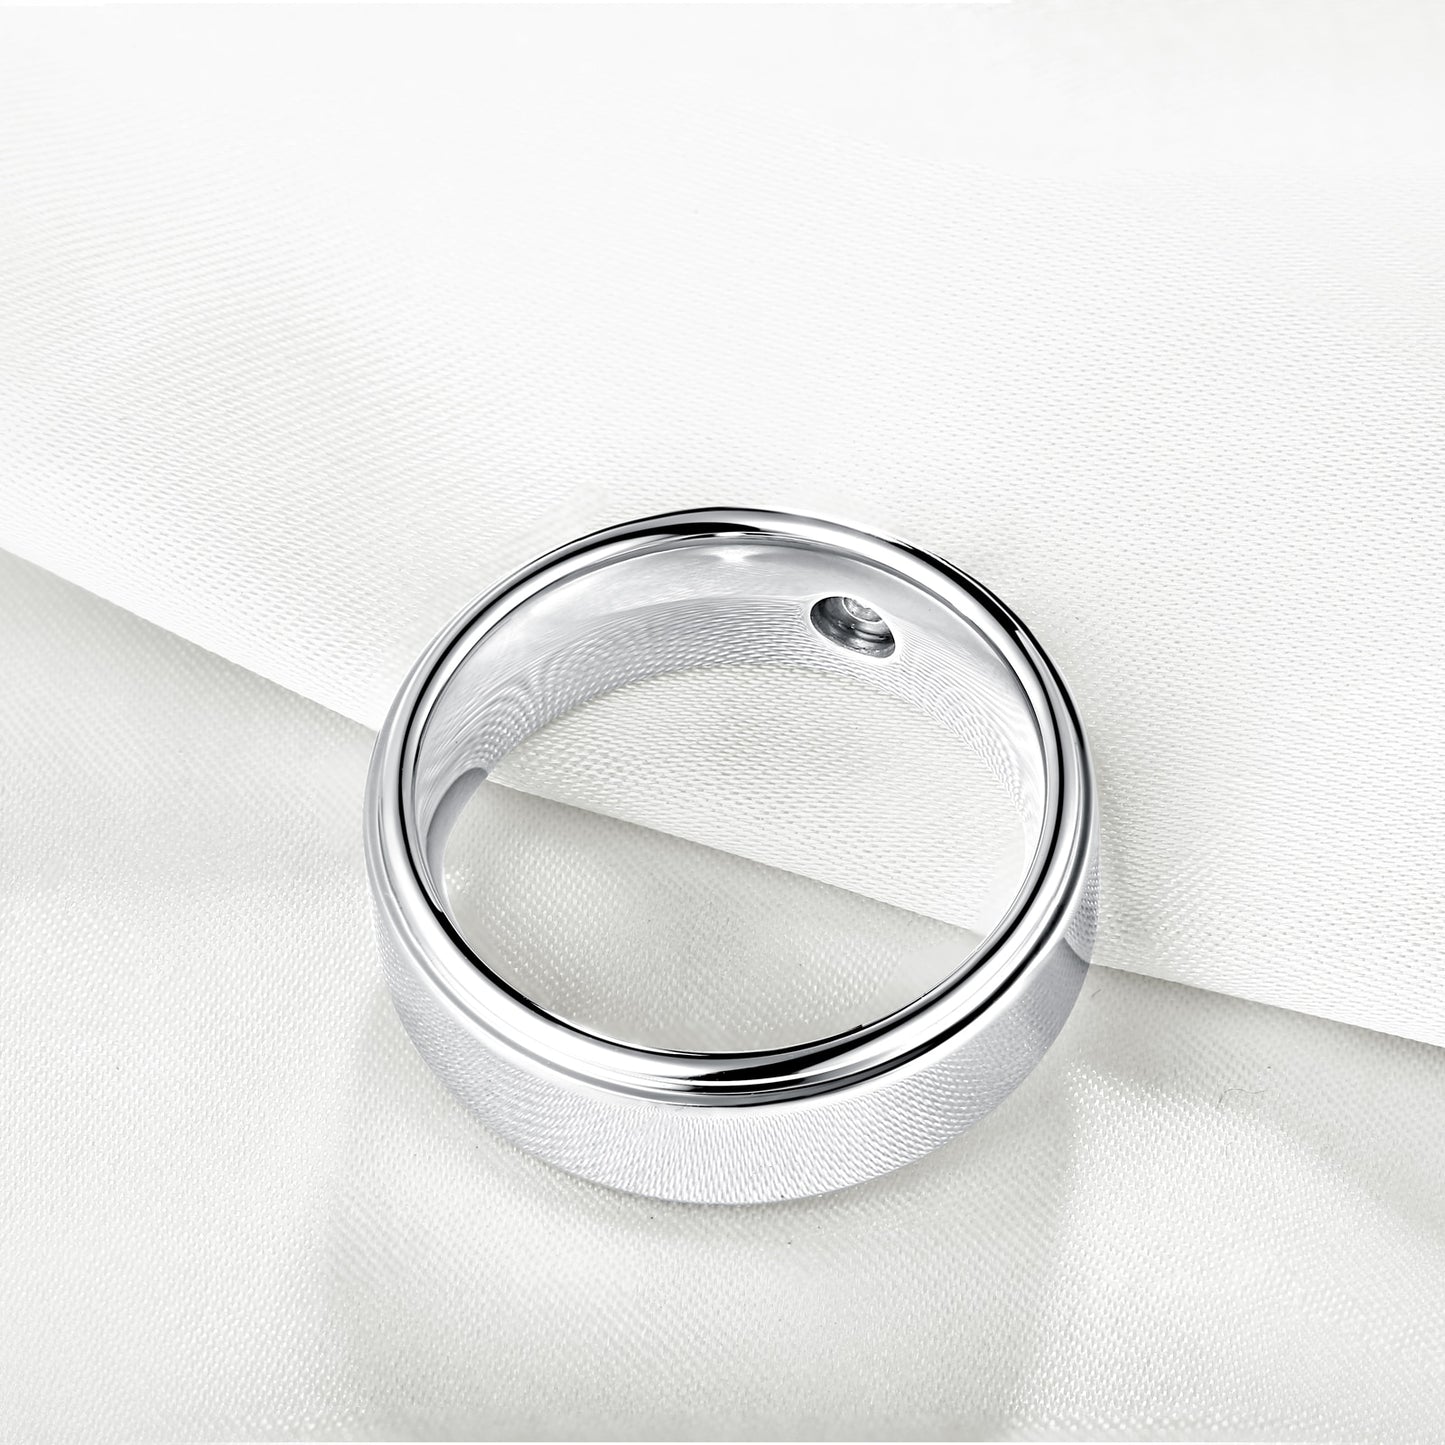 8mm Round Cubic Zirconia Silver Tungsten Mens Ring